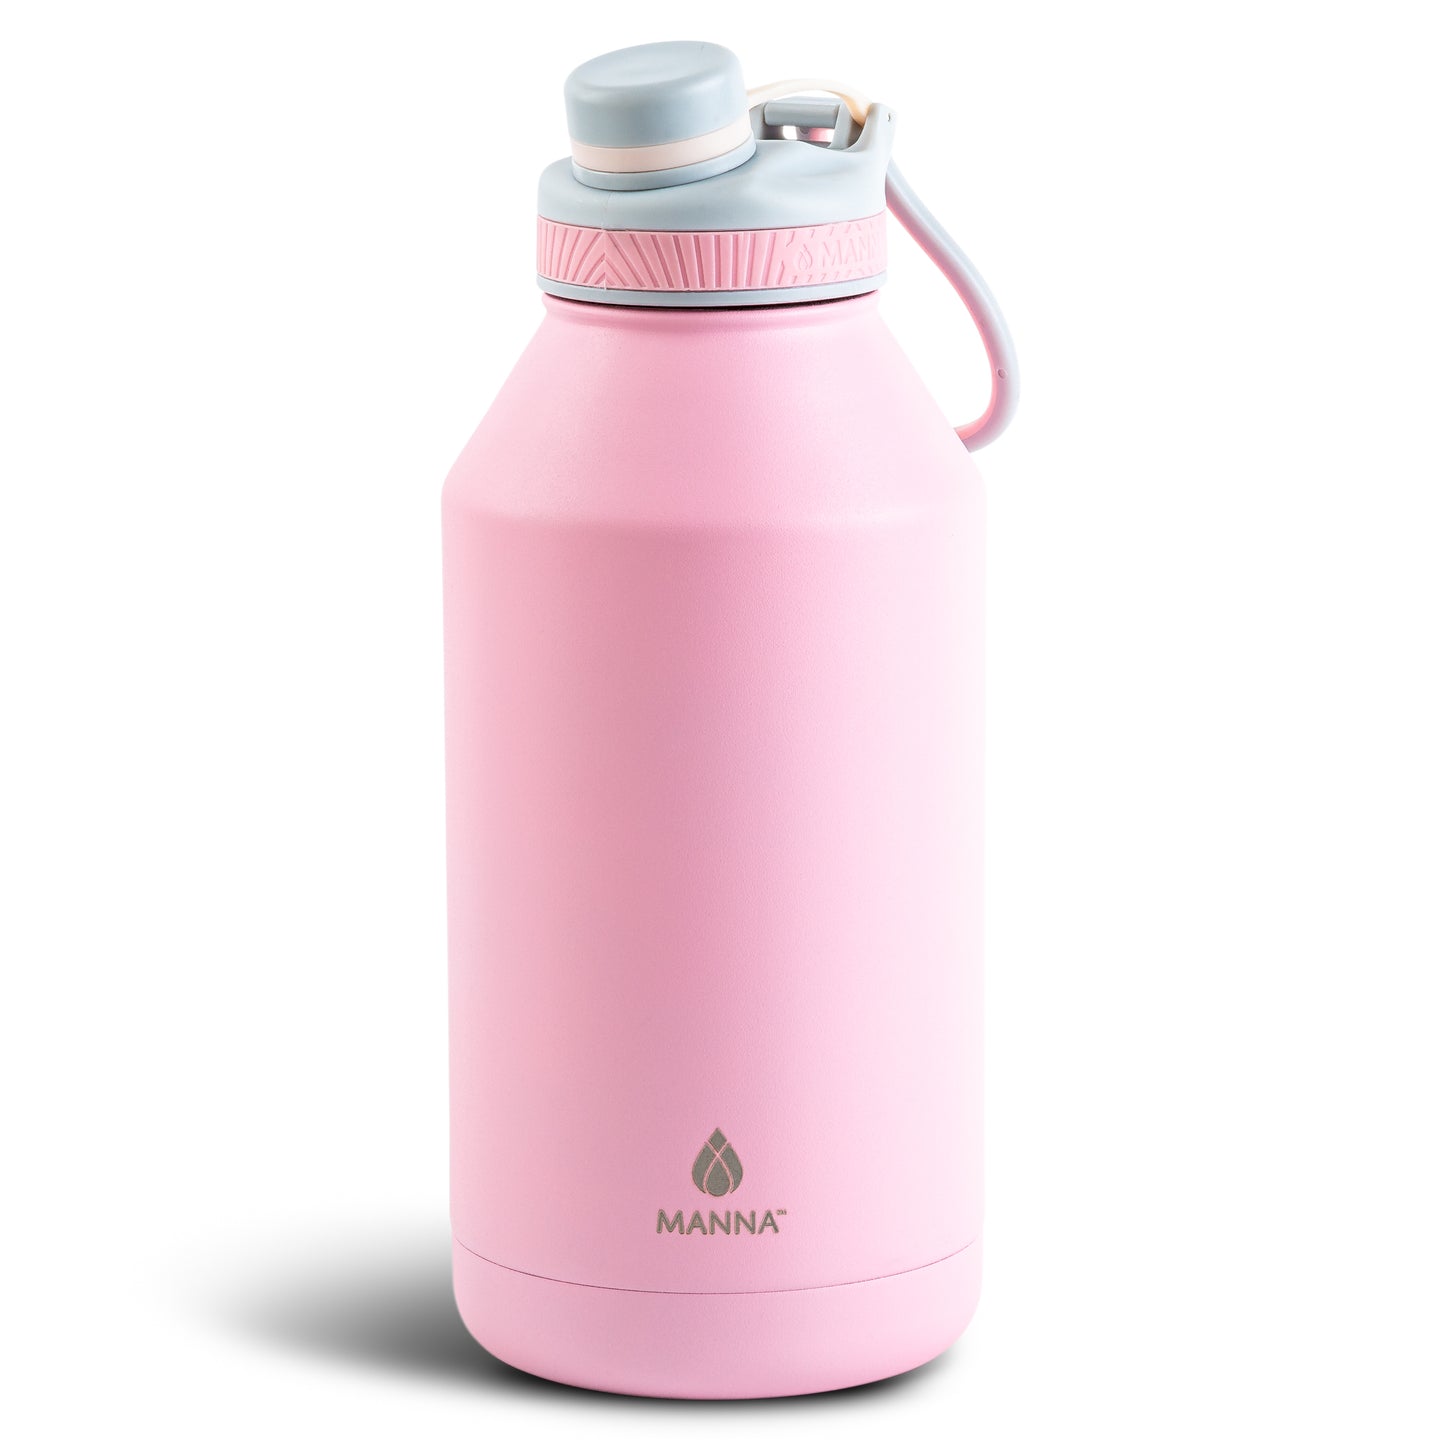 64 oz Ranger Pro Pink – TAL™ Hydration